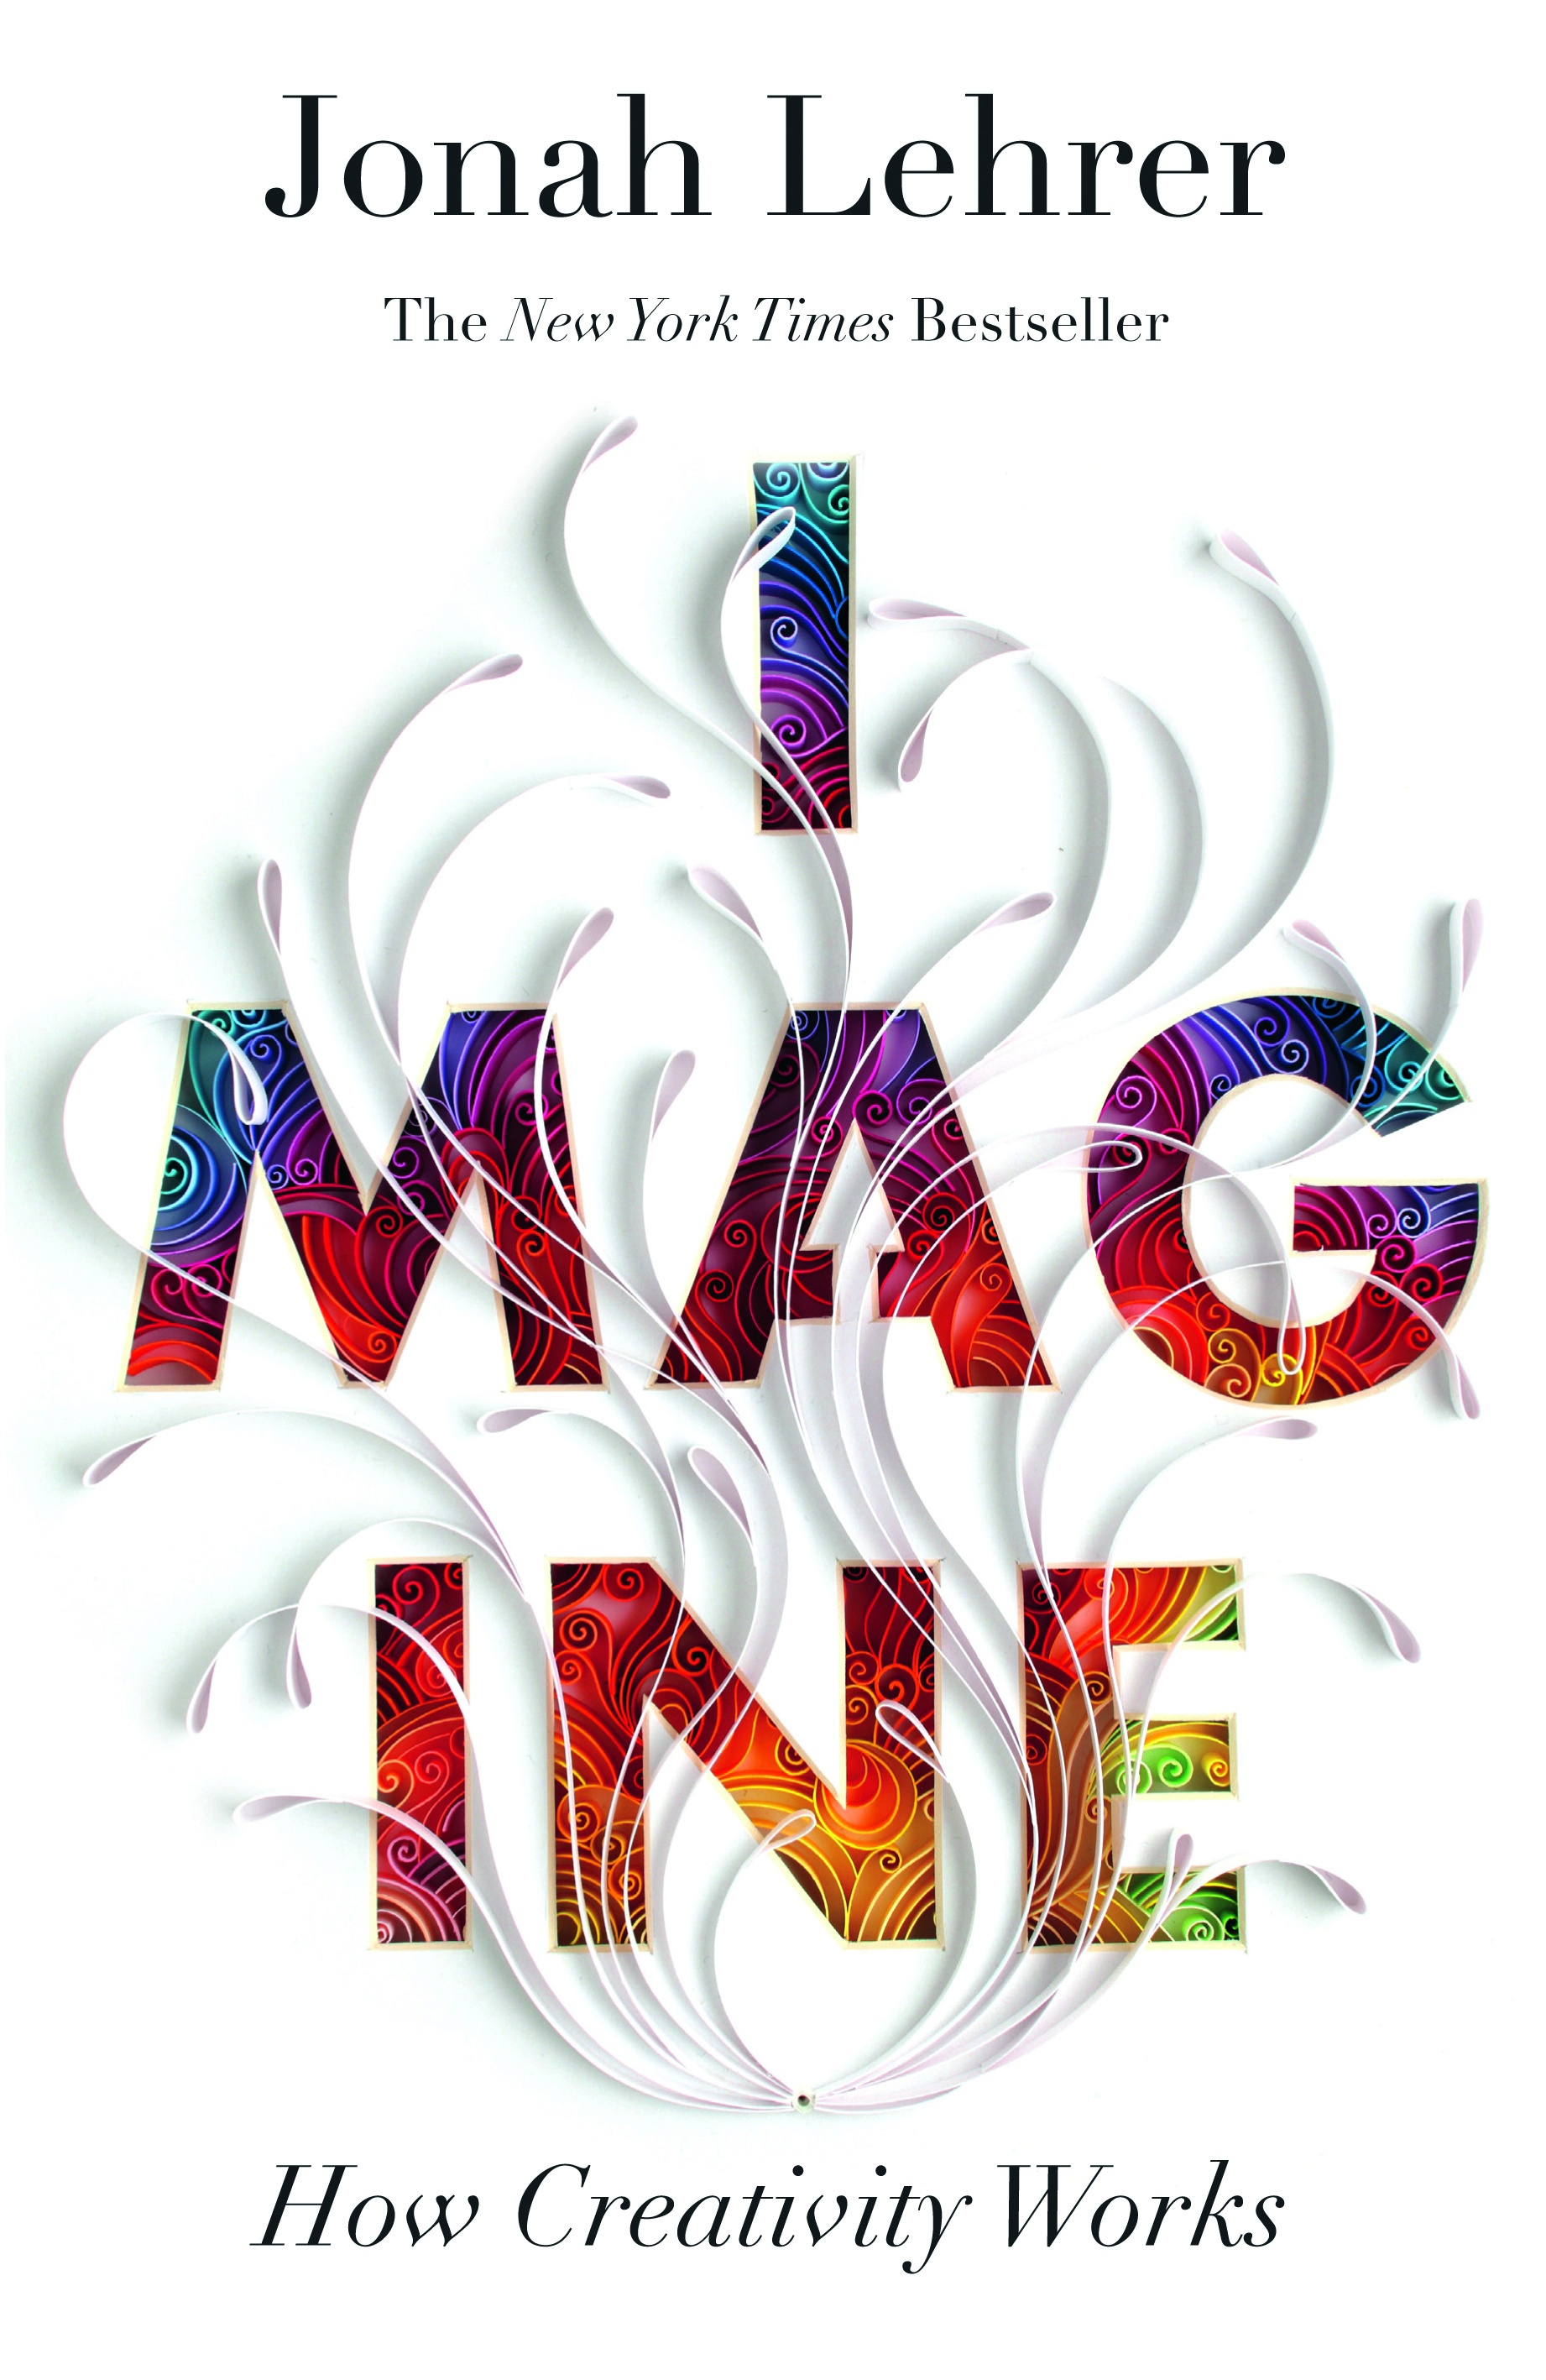 Imagine – How creativity works by Jonah Lehrer | Ignition Blog